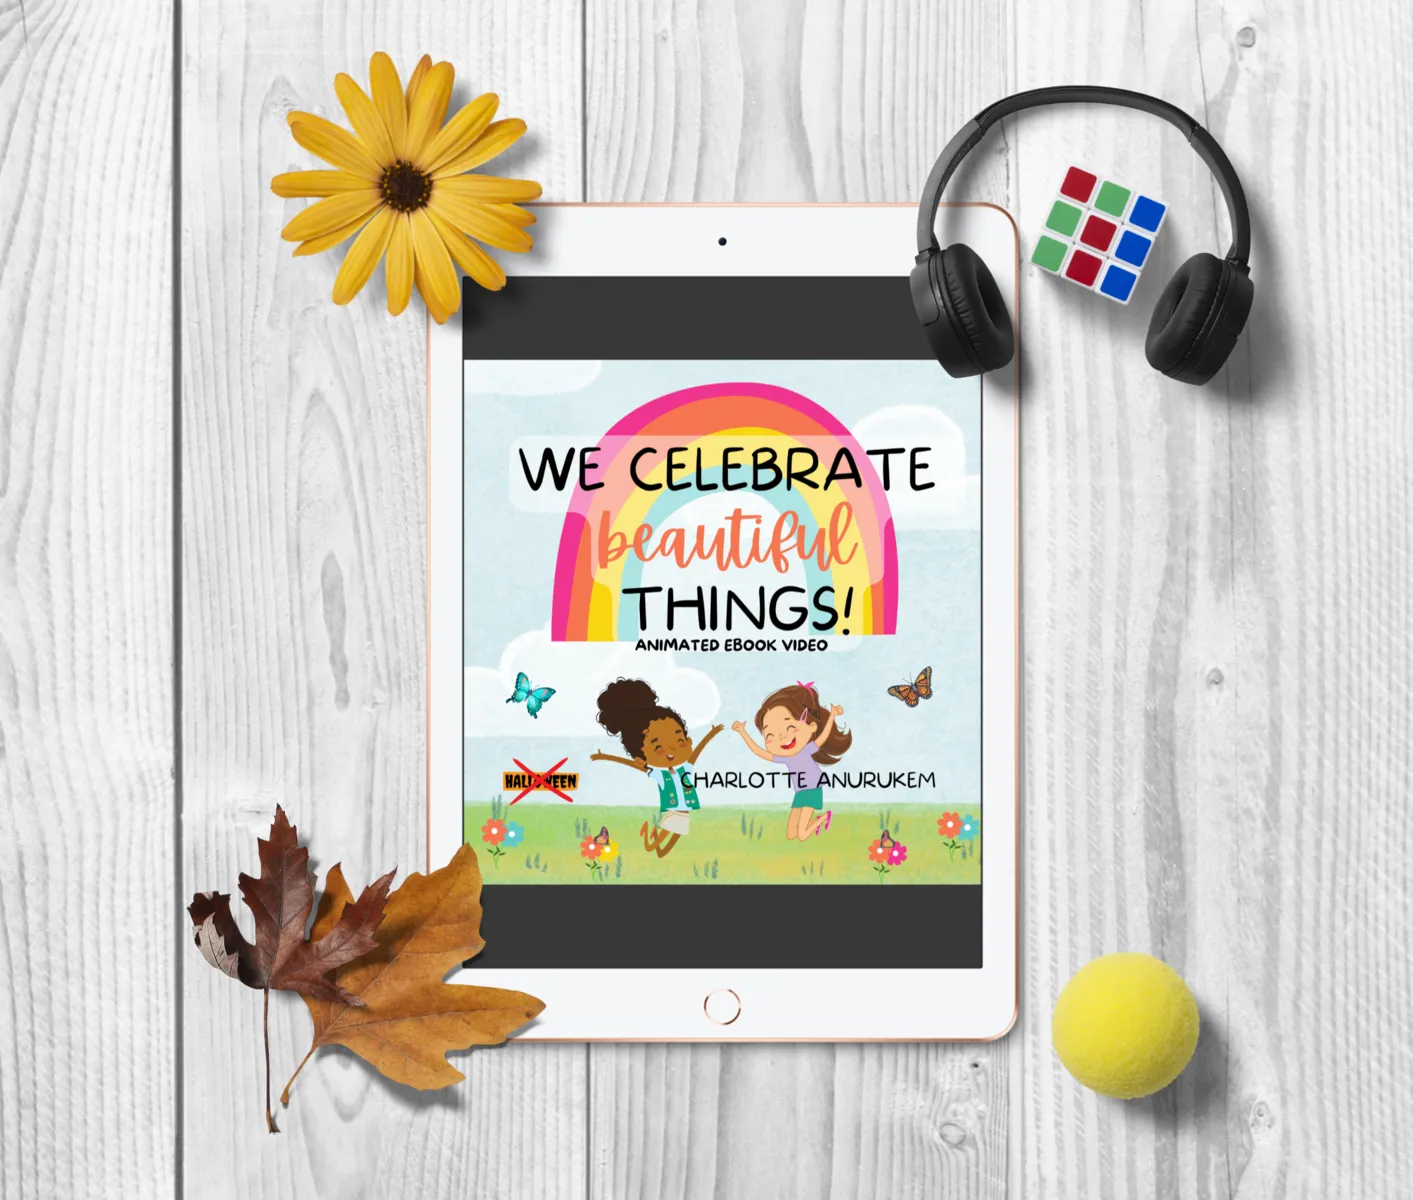 Animated 'We celebrate beautiful things' ebook video